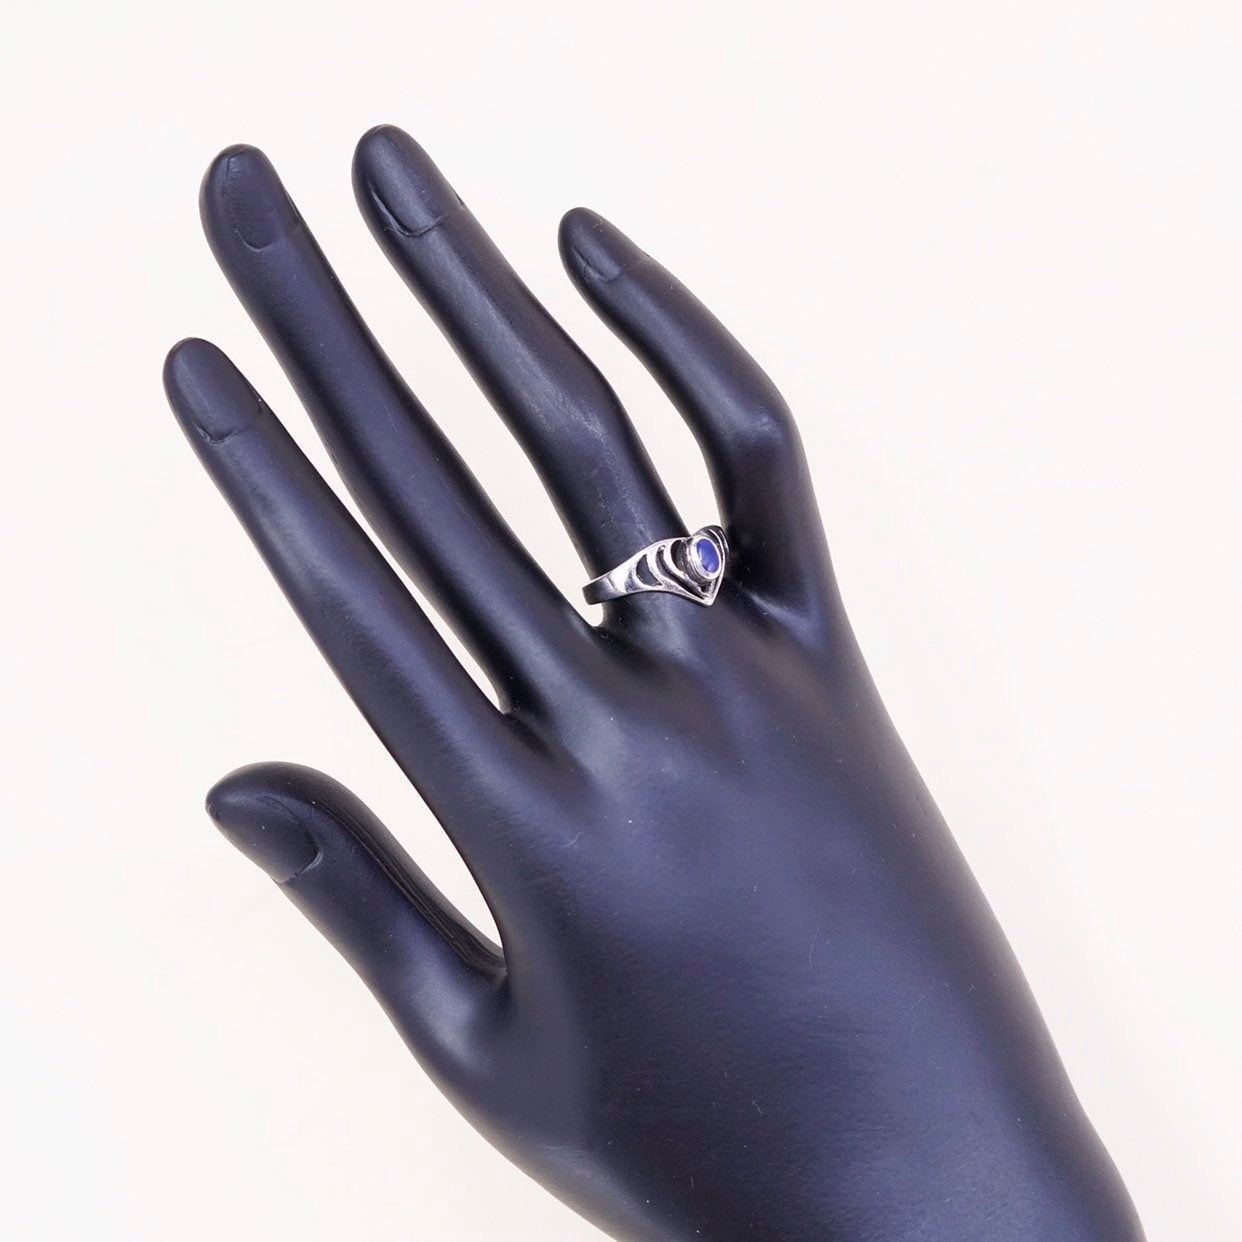 Size 7.5, vtg sterling 925 silver handmade ring, oval blue onyx